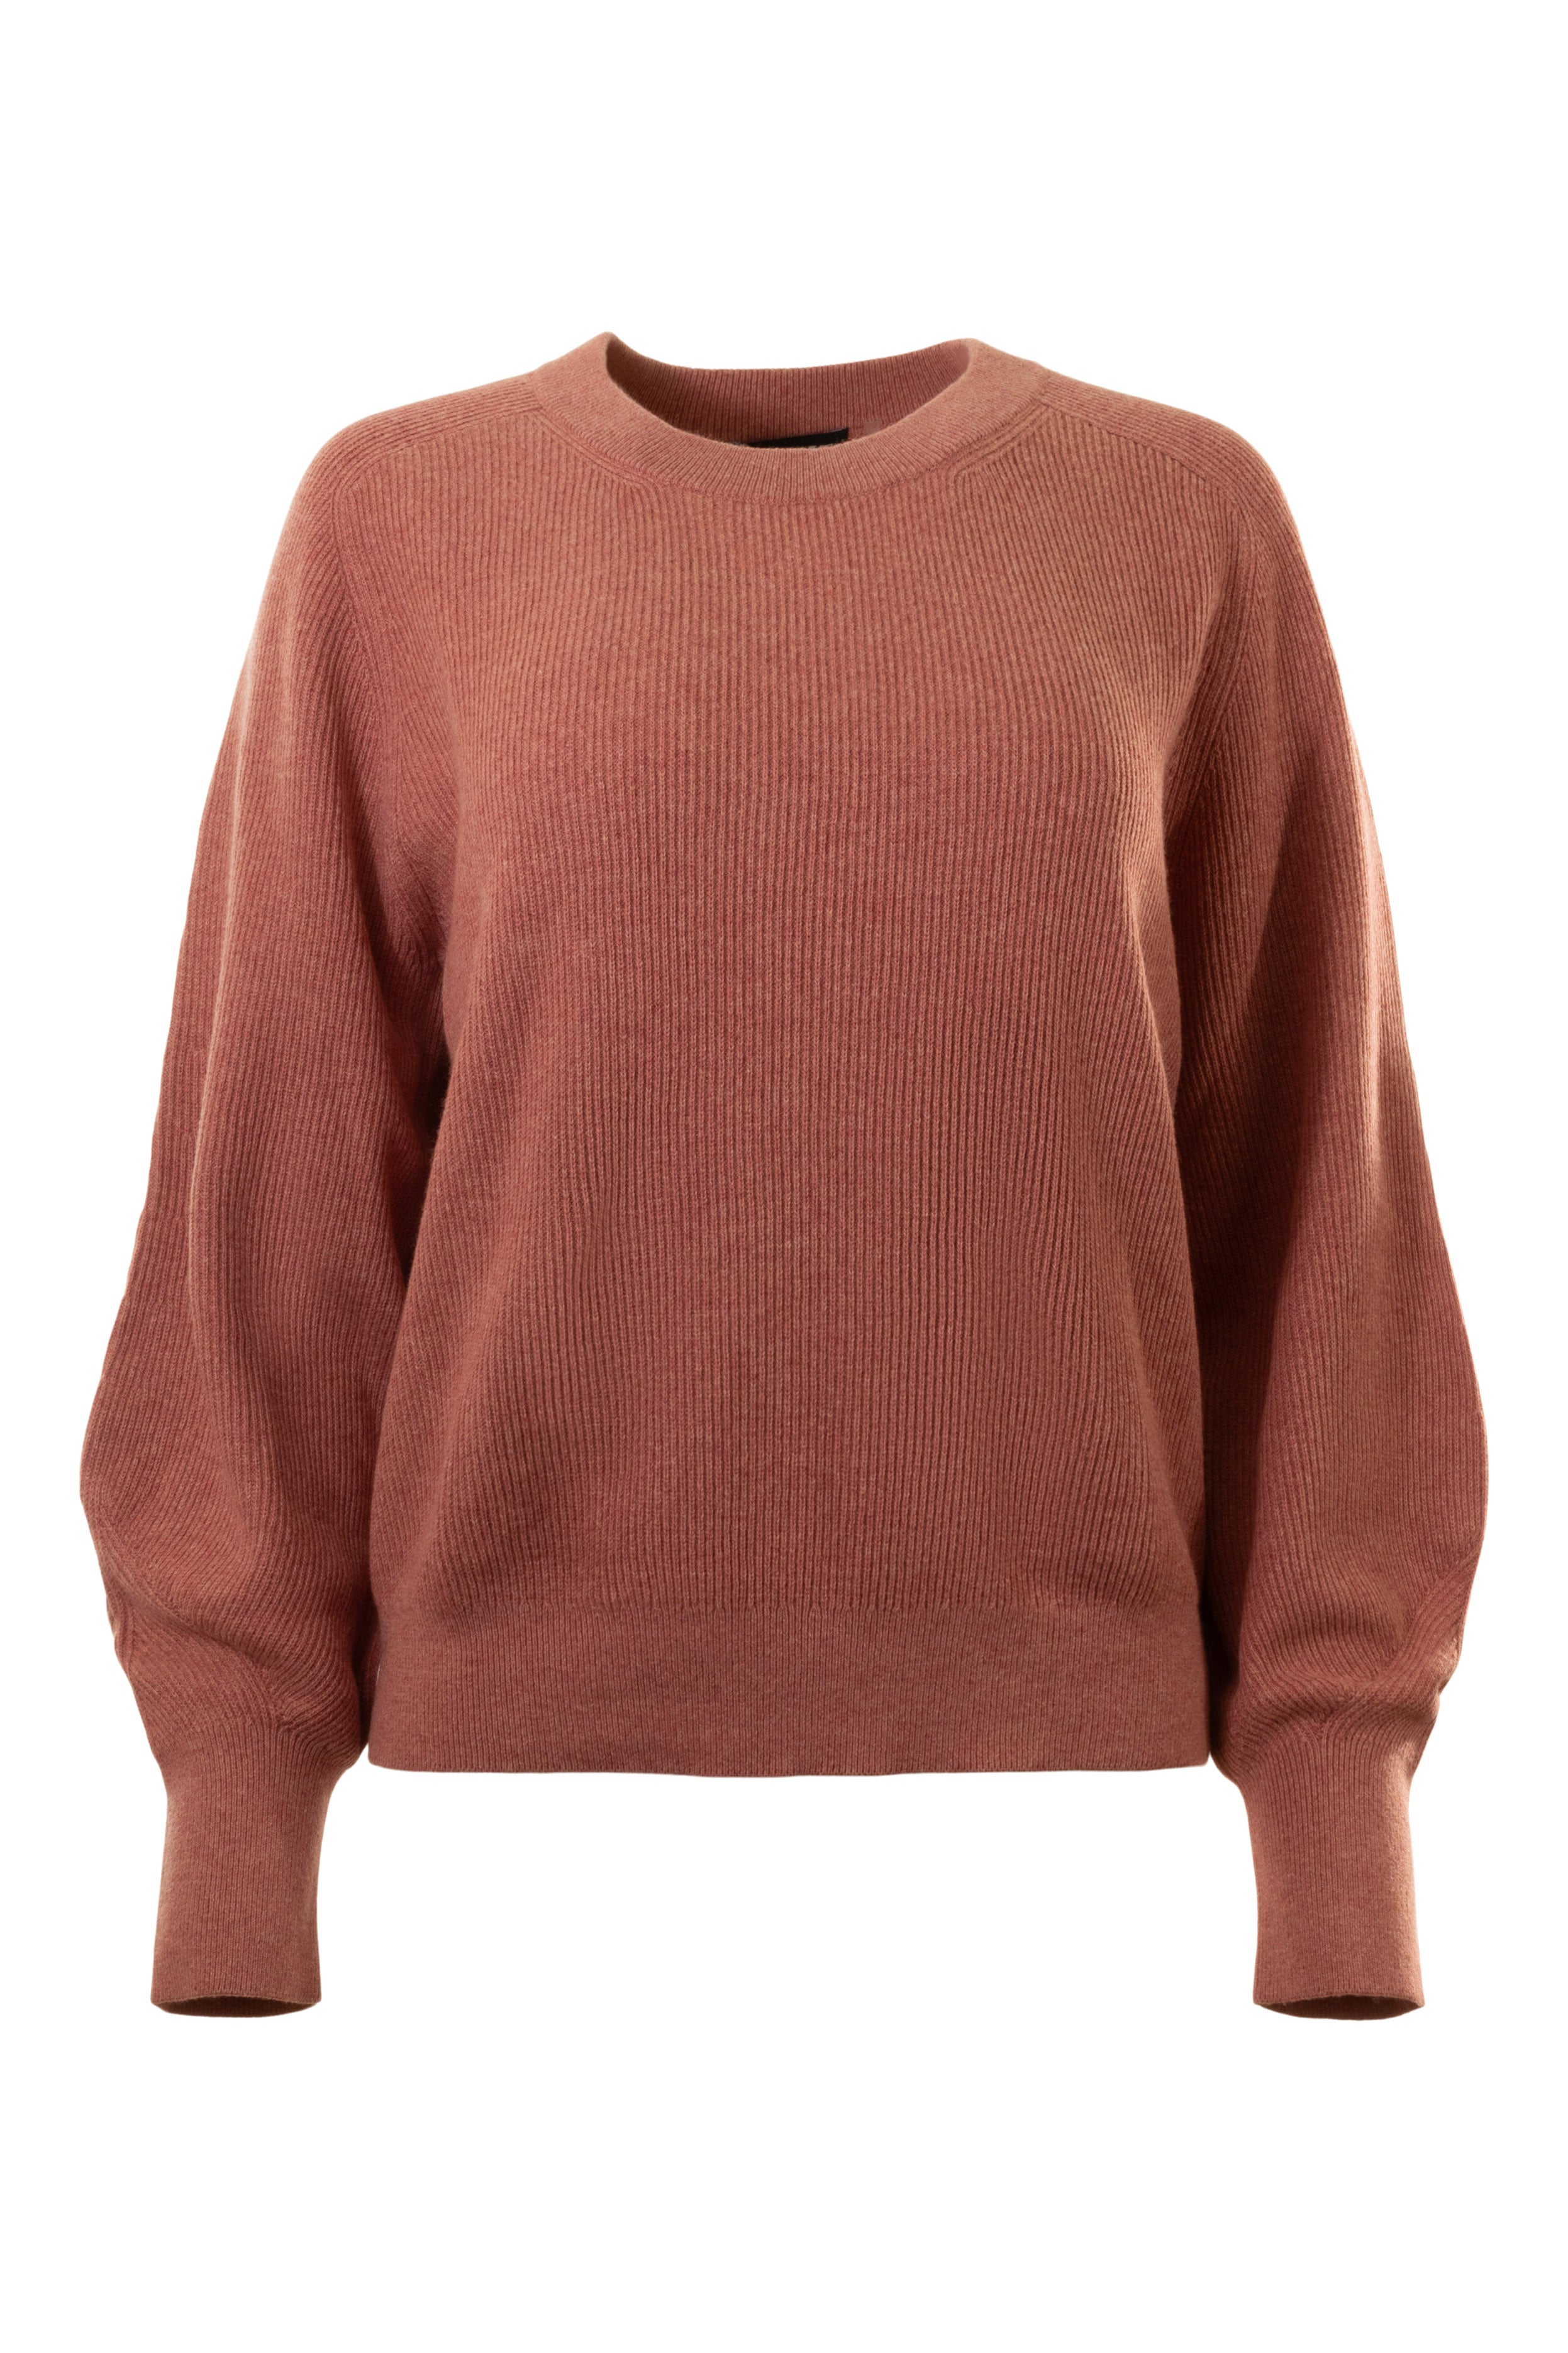 Repeat Cashmere Blouson Sleeve Sweater in Cinnamon